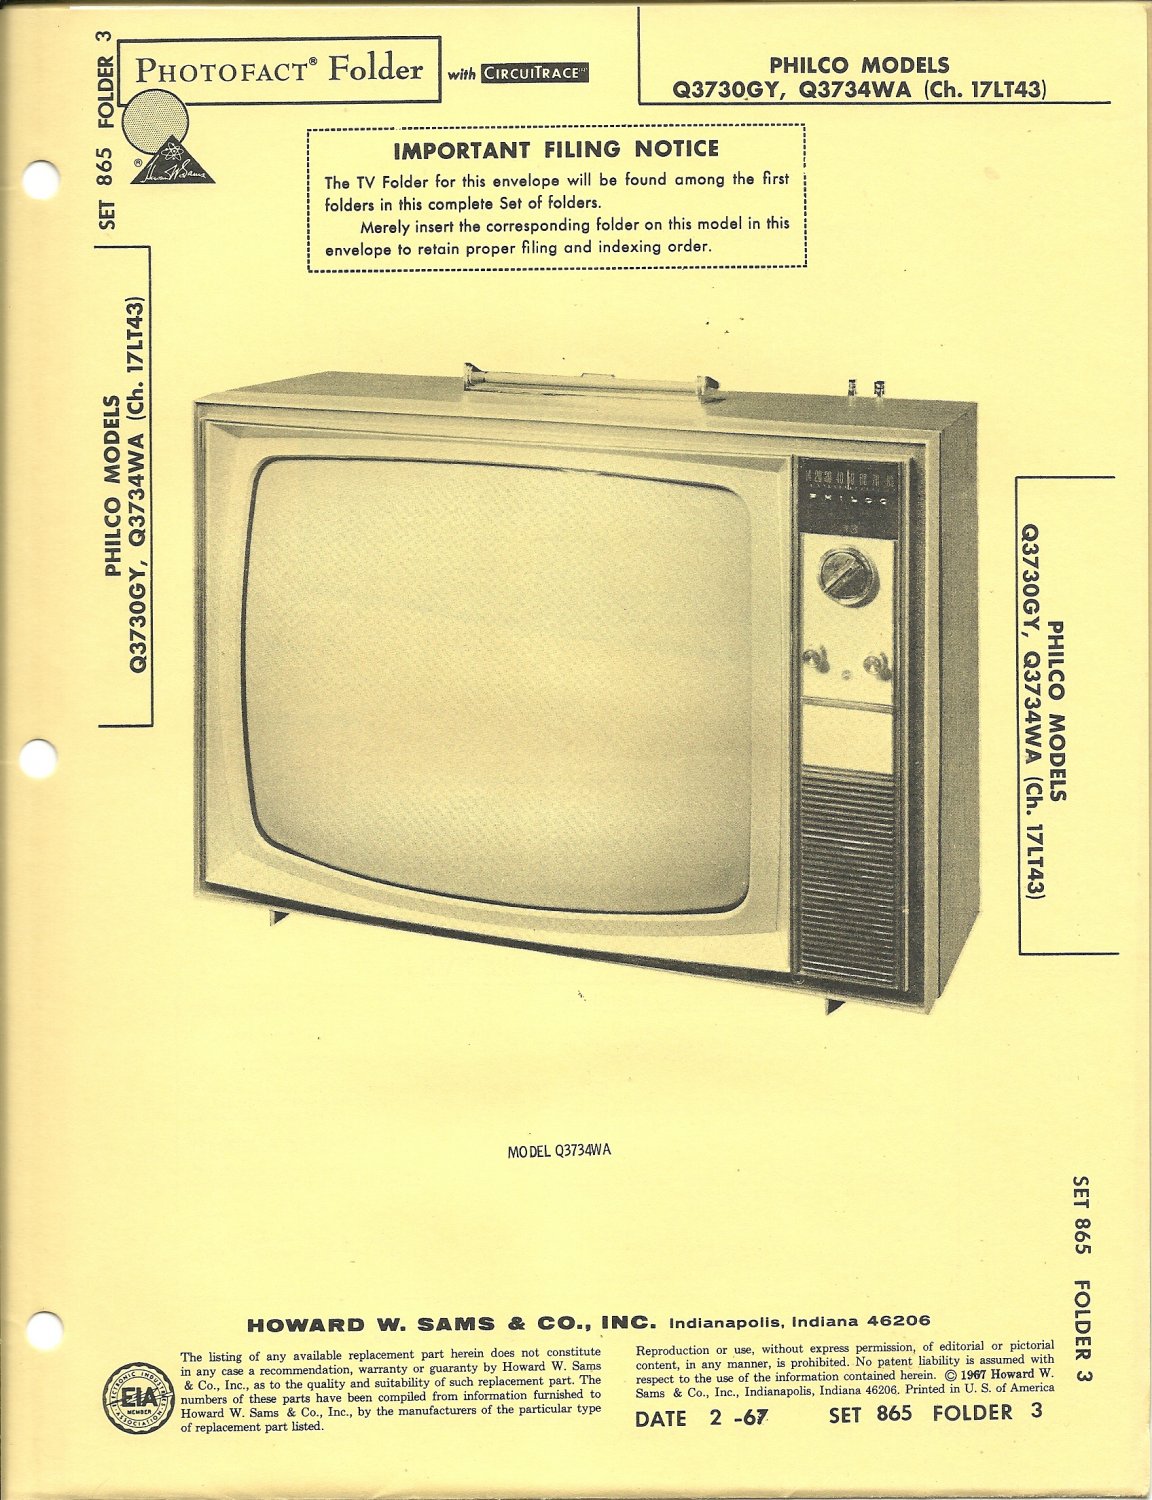 SAMS Photofact - Set 865 - Folder 3 - Feb 1967 - PHILCO MODELS Q3730GY